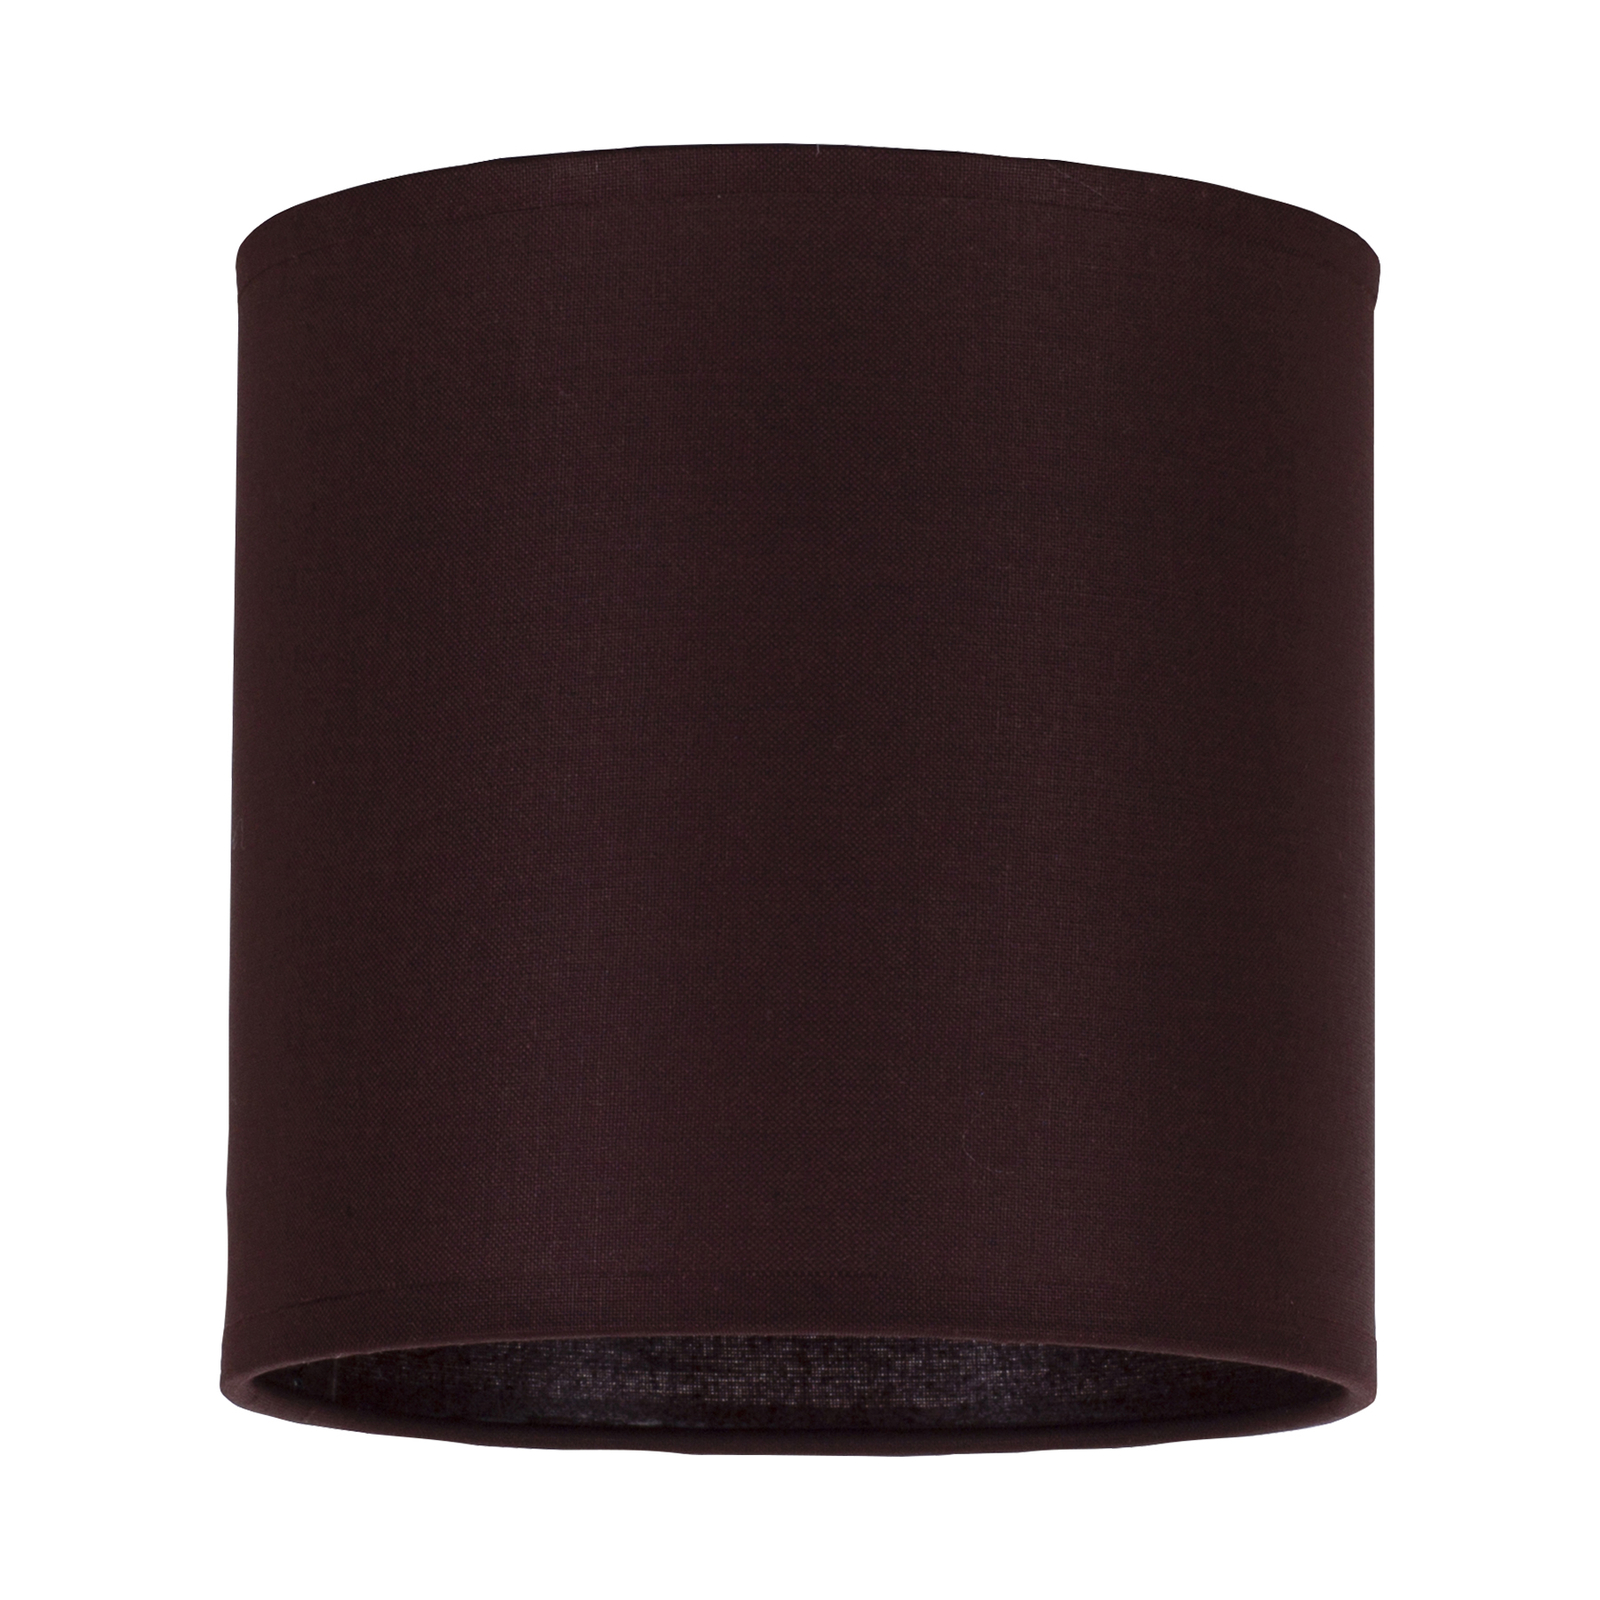 Roller lampshade dark brown Ø 15 cm height 15 cm